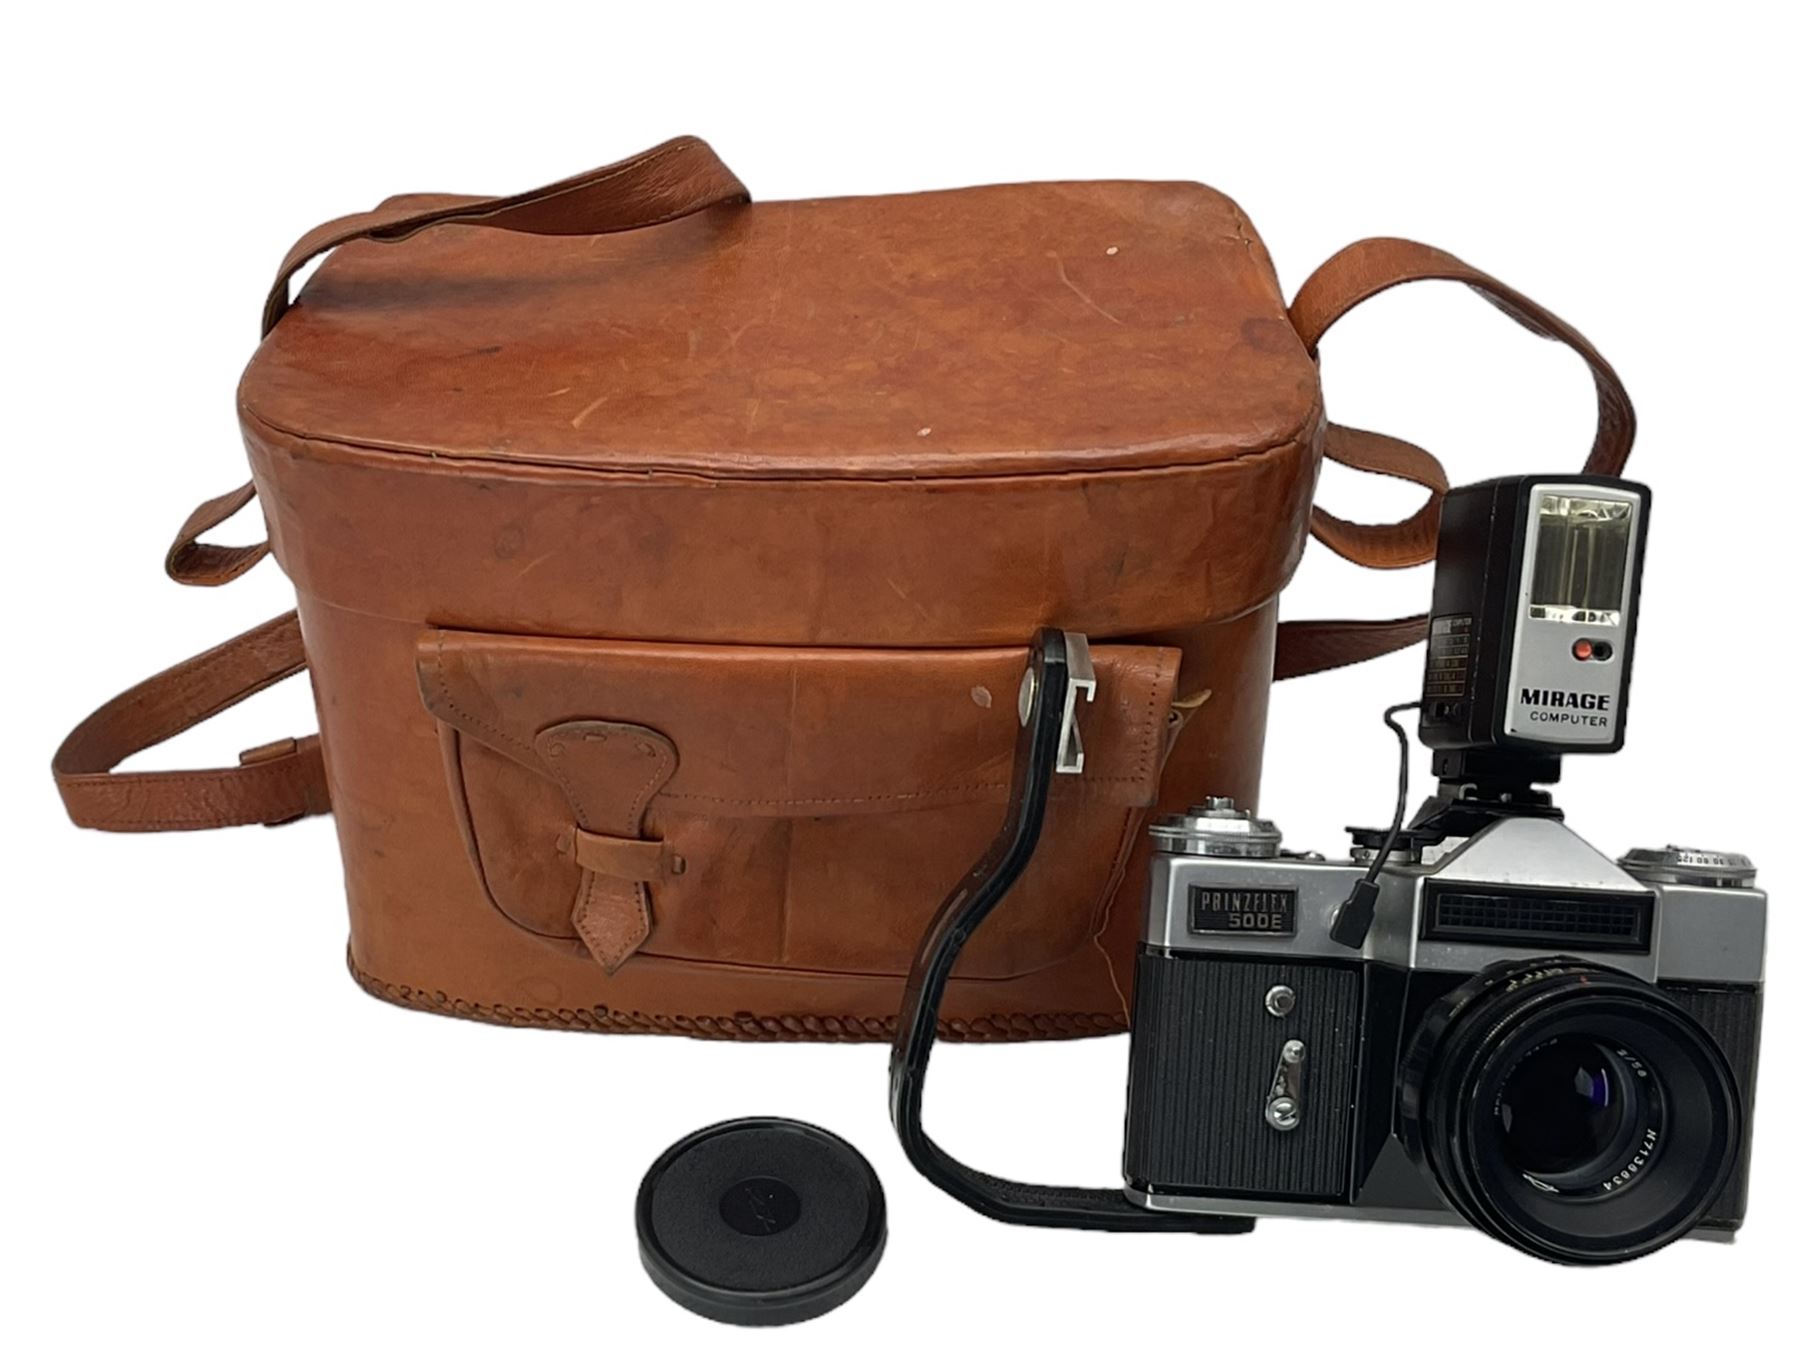 Prinzflex 500E SLR camera in custom made leather case - Image 2 of 5